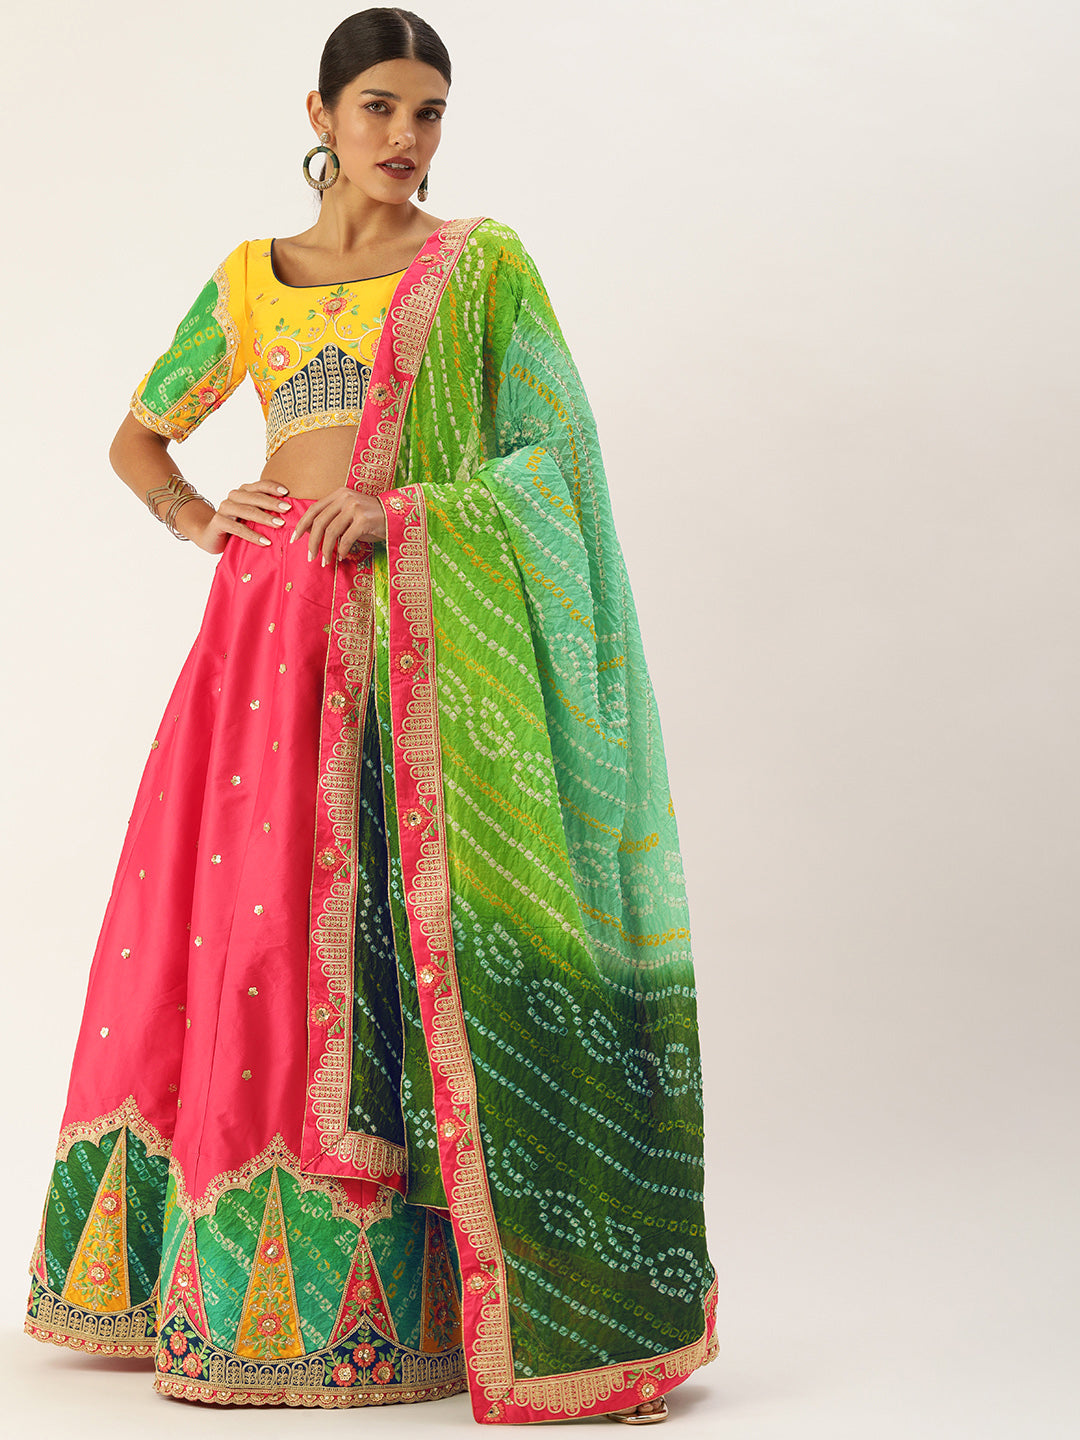 Women's Embroidered Bollywood Yellow Jacquard Lehenga Choli